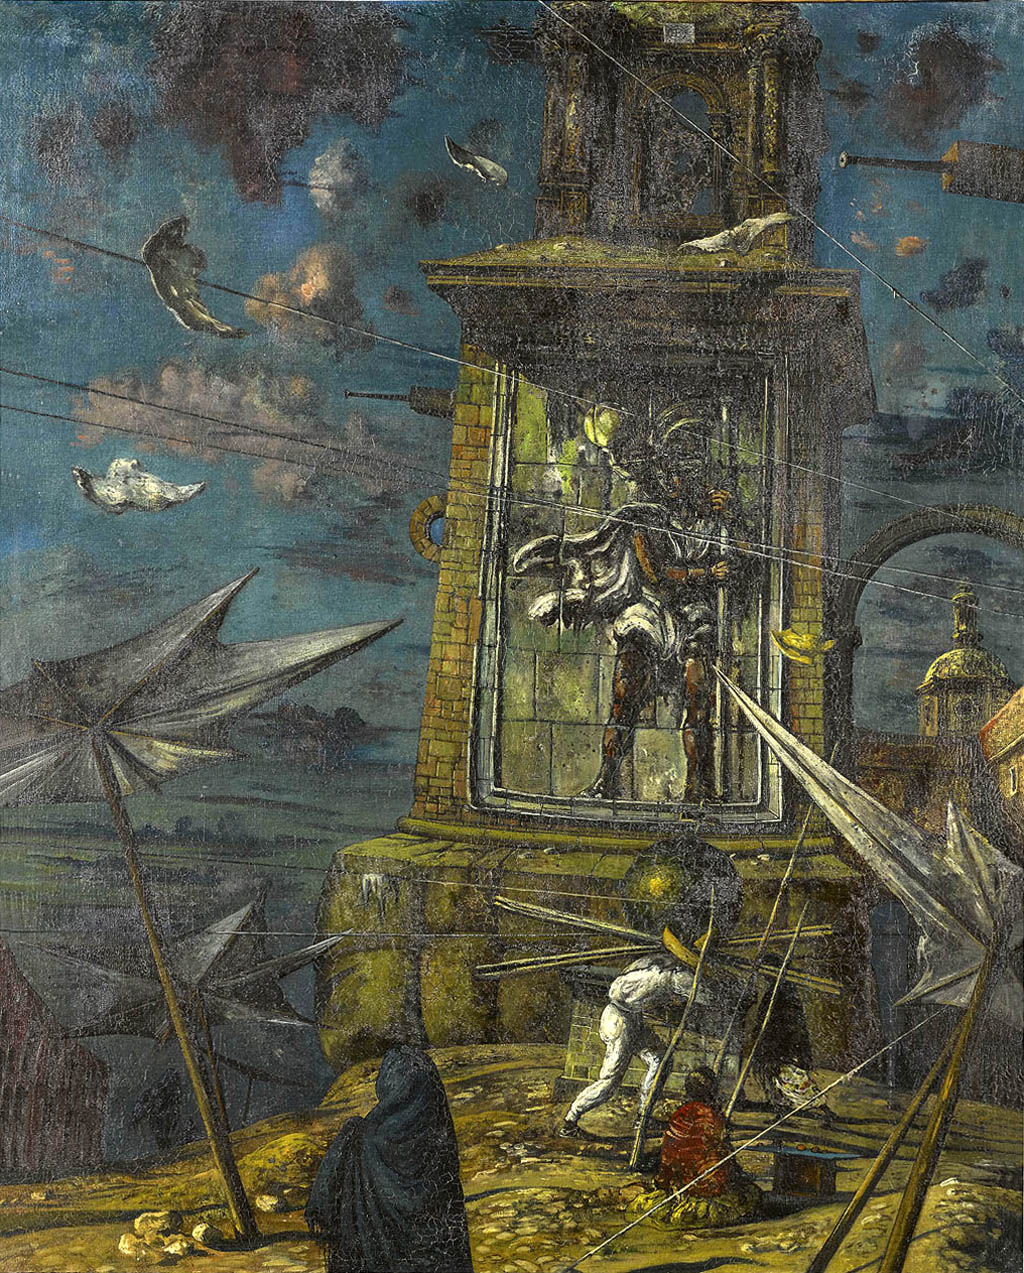 Eugene Berman - La Torre de S. Cristobal (The Tower of Saint Christopher) - 1948 oil on canvas